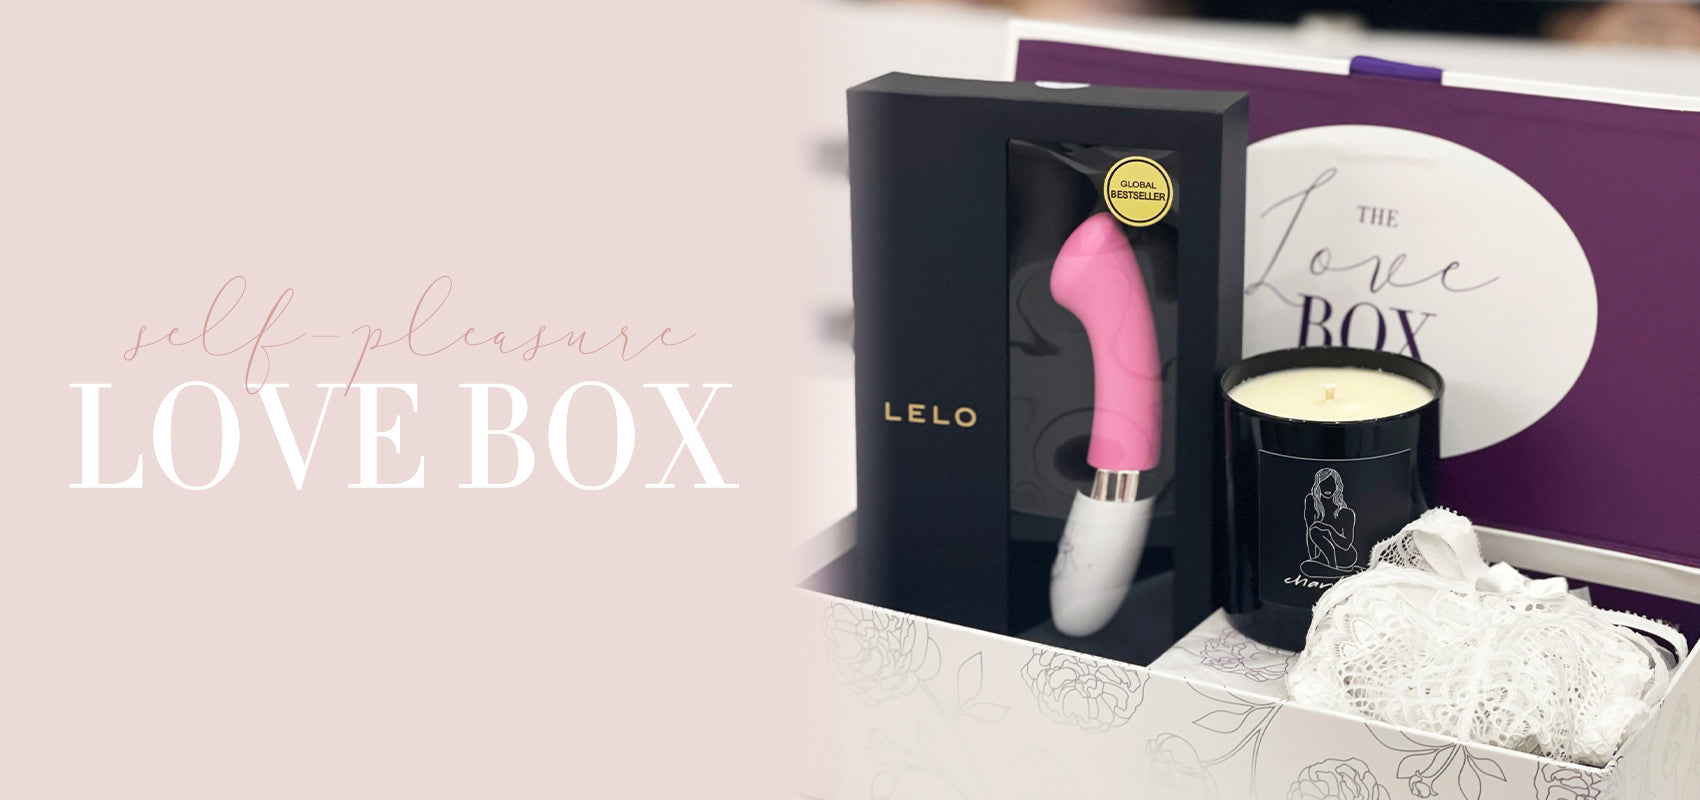 Introducing the Self-Pleasure Love Box – Journelle